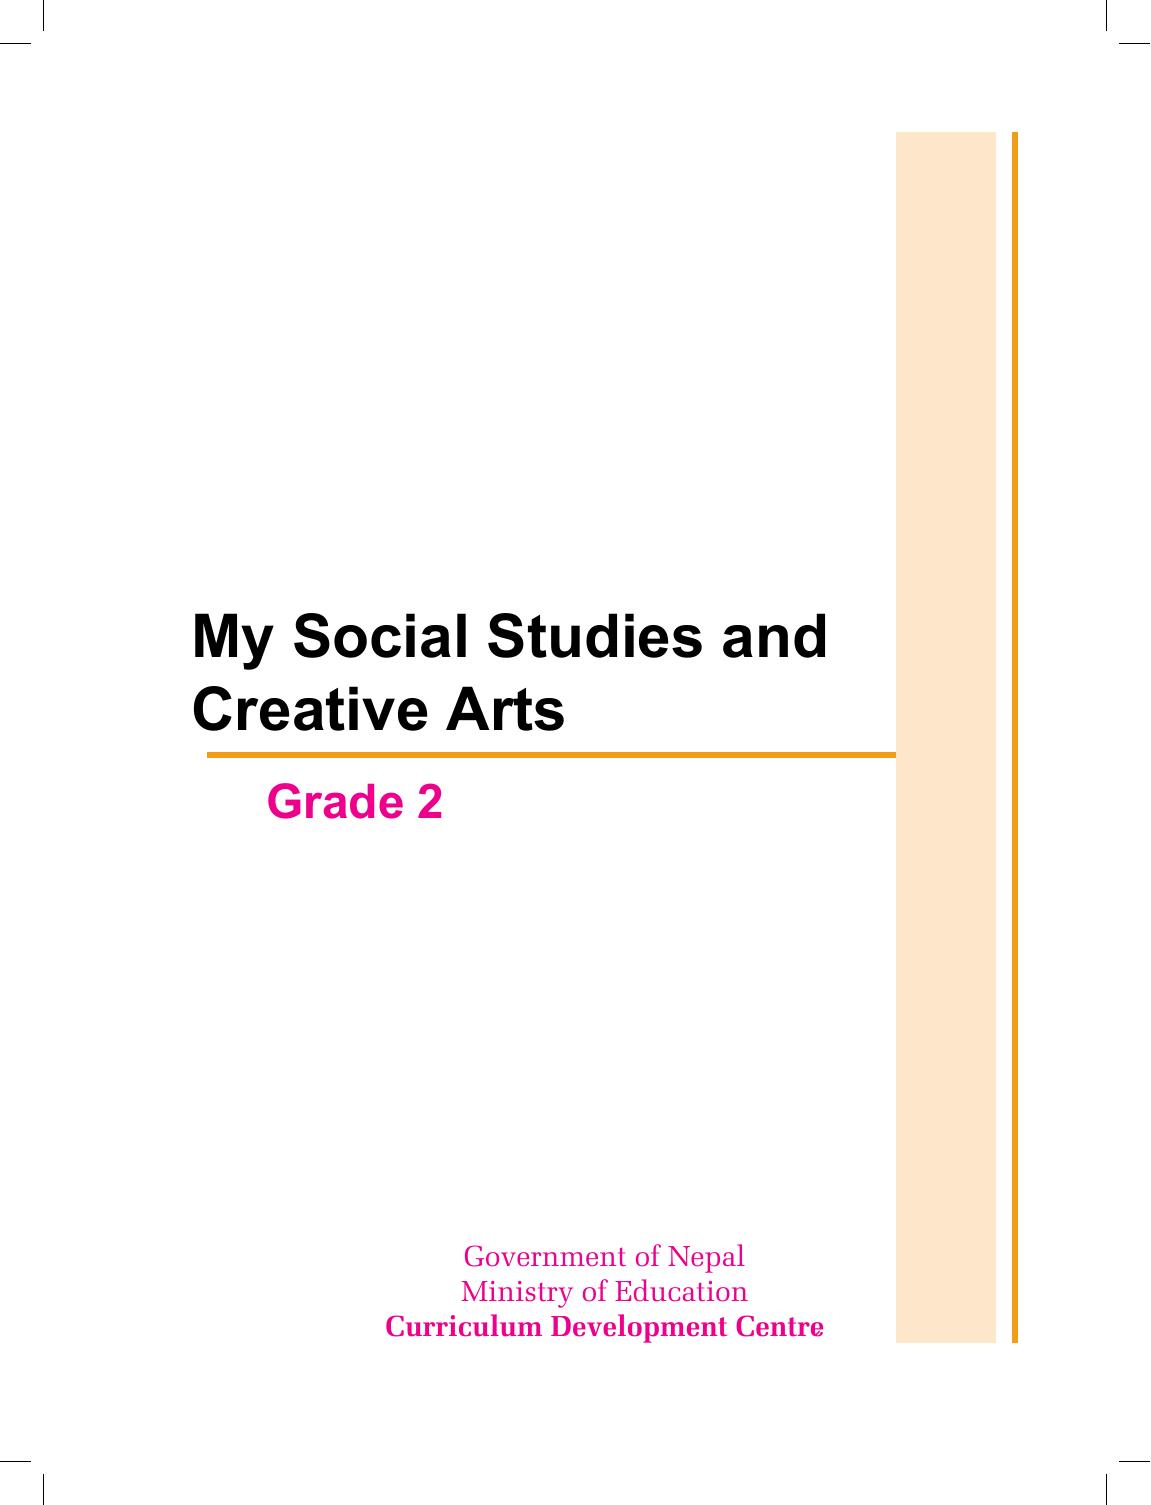 CDC 2074 - My Social Studies and Creative Art Grade 2